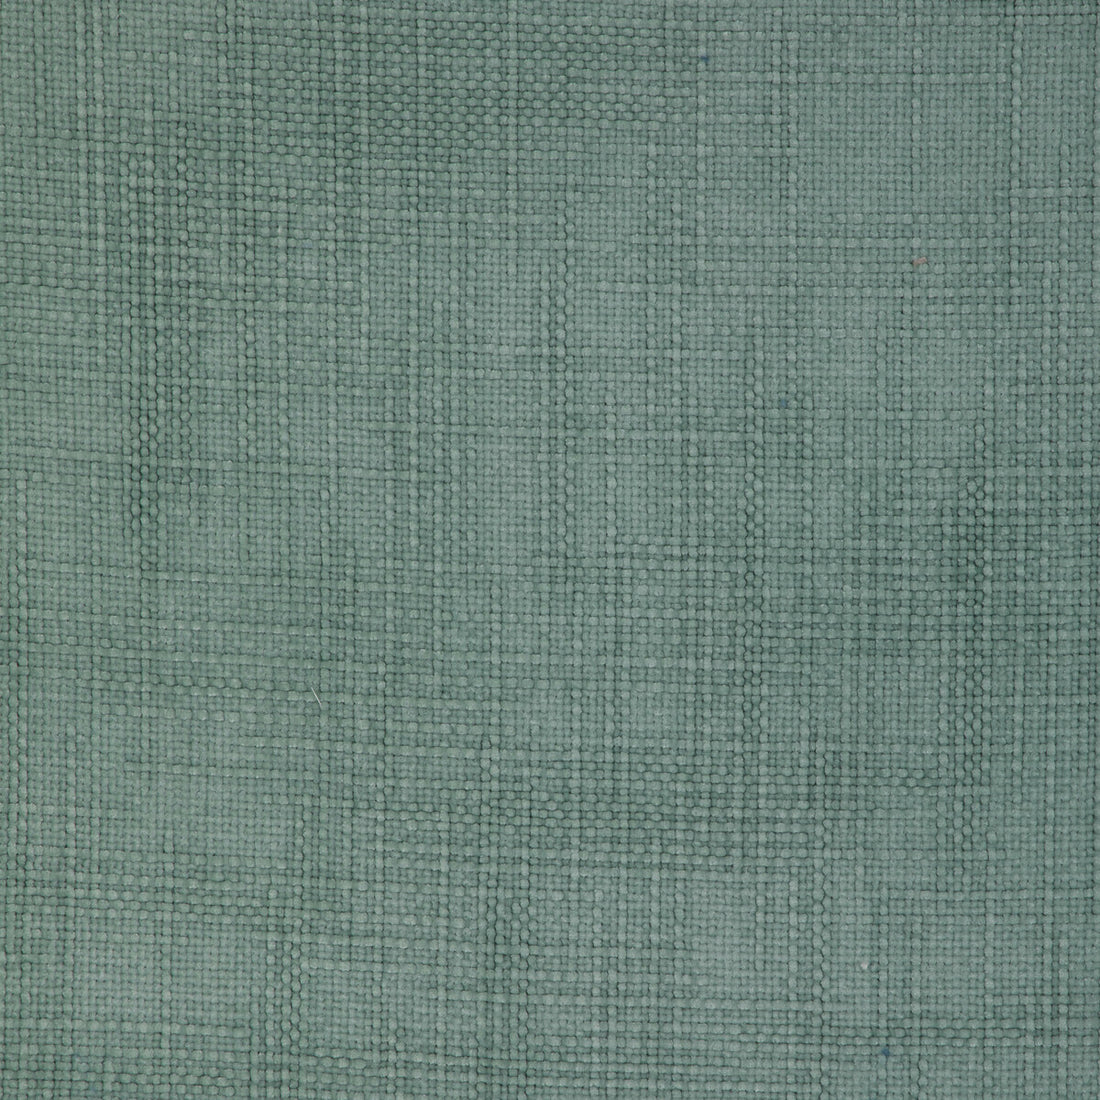 Kravet Smart fabric in 36991-13 color - pattern 36991.13.0 - by Kravet Smart in the Performance Kravetarmor collection